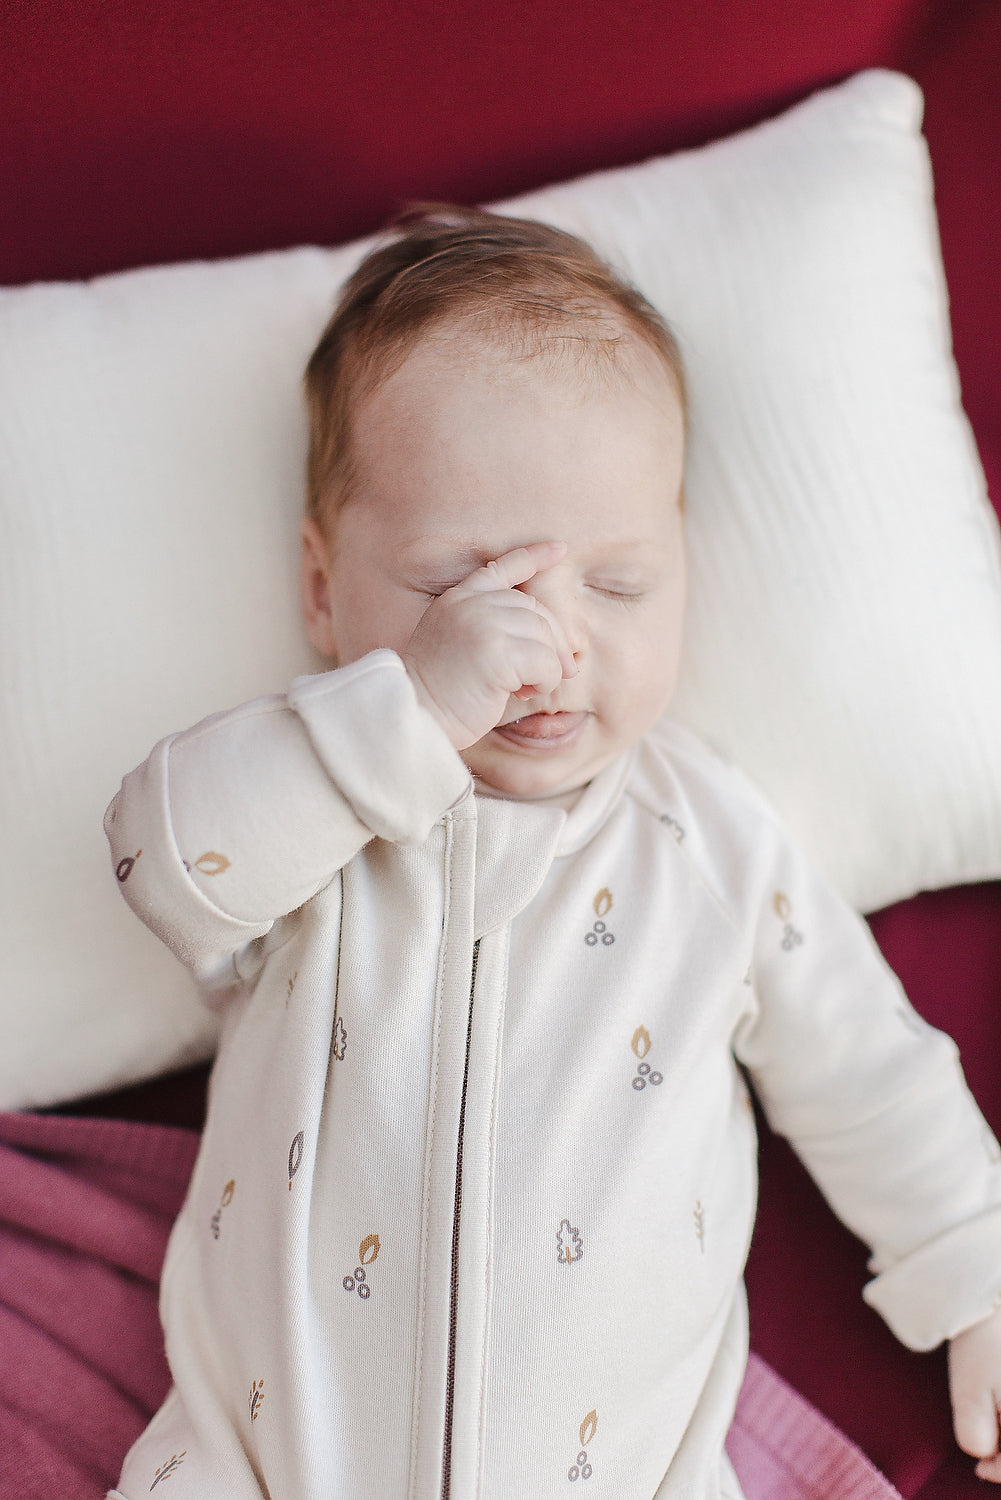 Pyjama bébé, 3-6 mois, fin, en coton bio